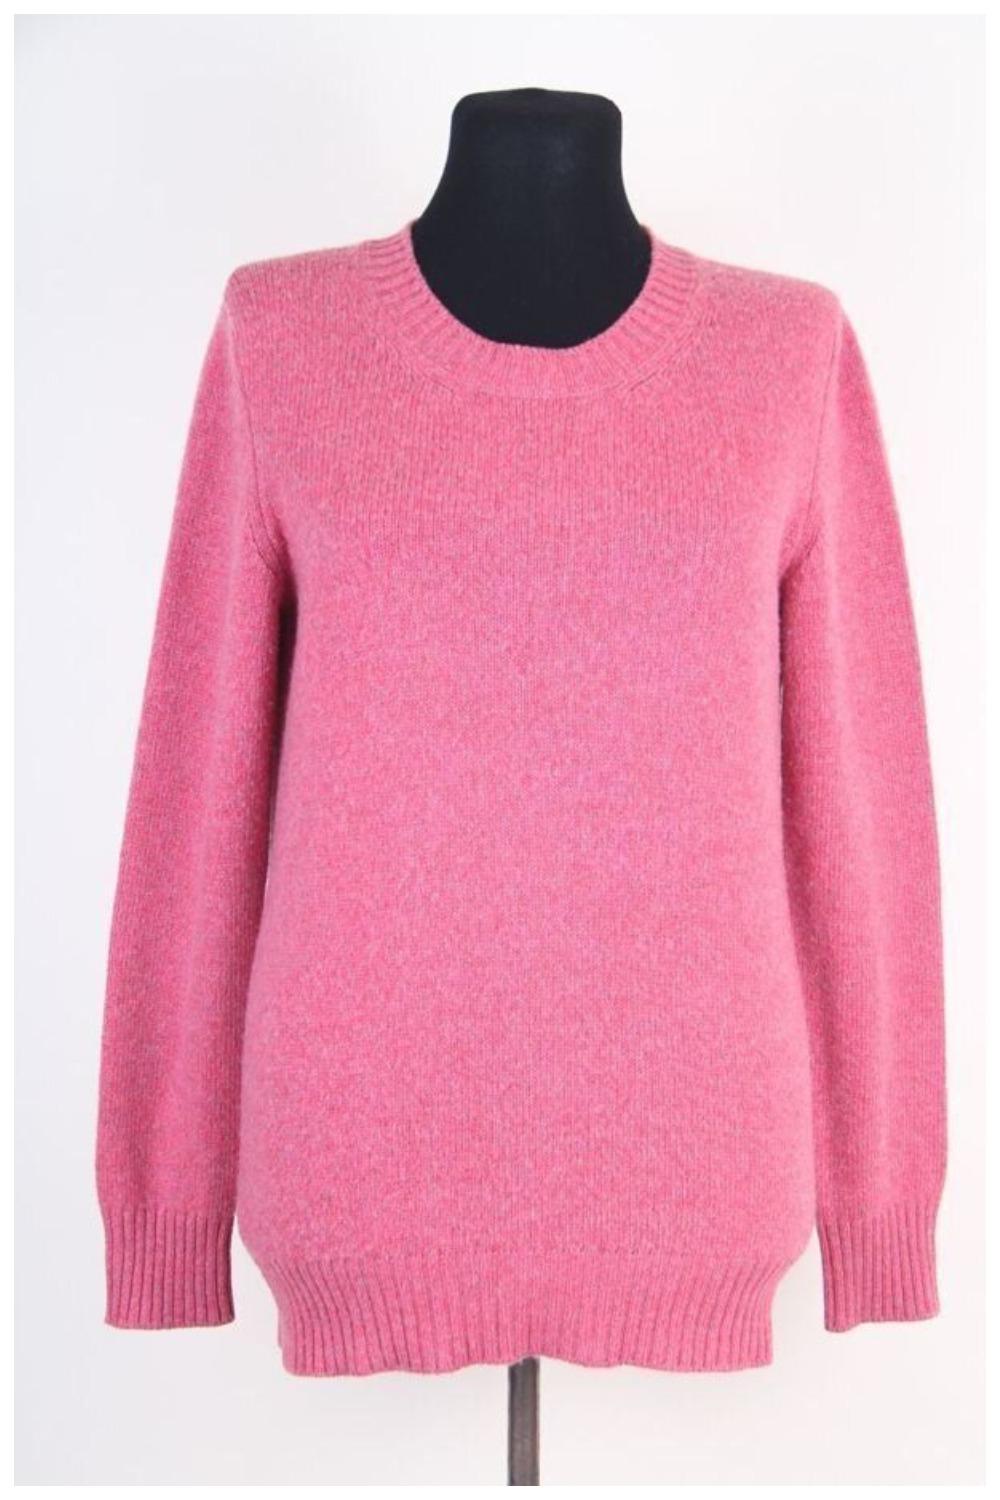 Chanel & Karl Lagerfeld 13P cashmere sweater jumper cardigan pink 2013 5